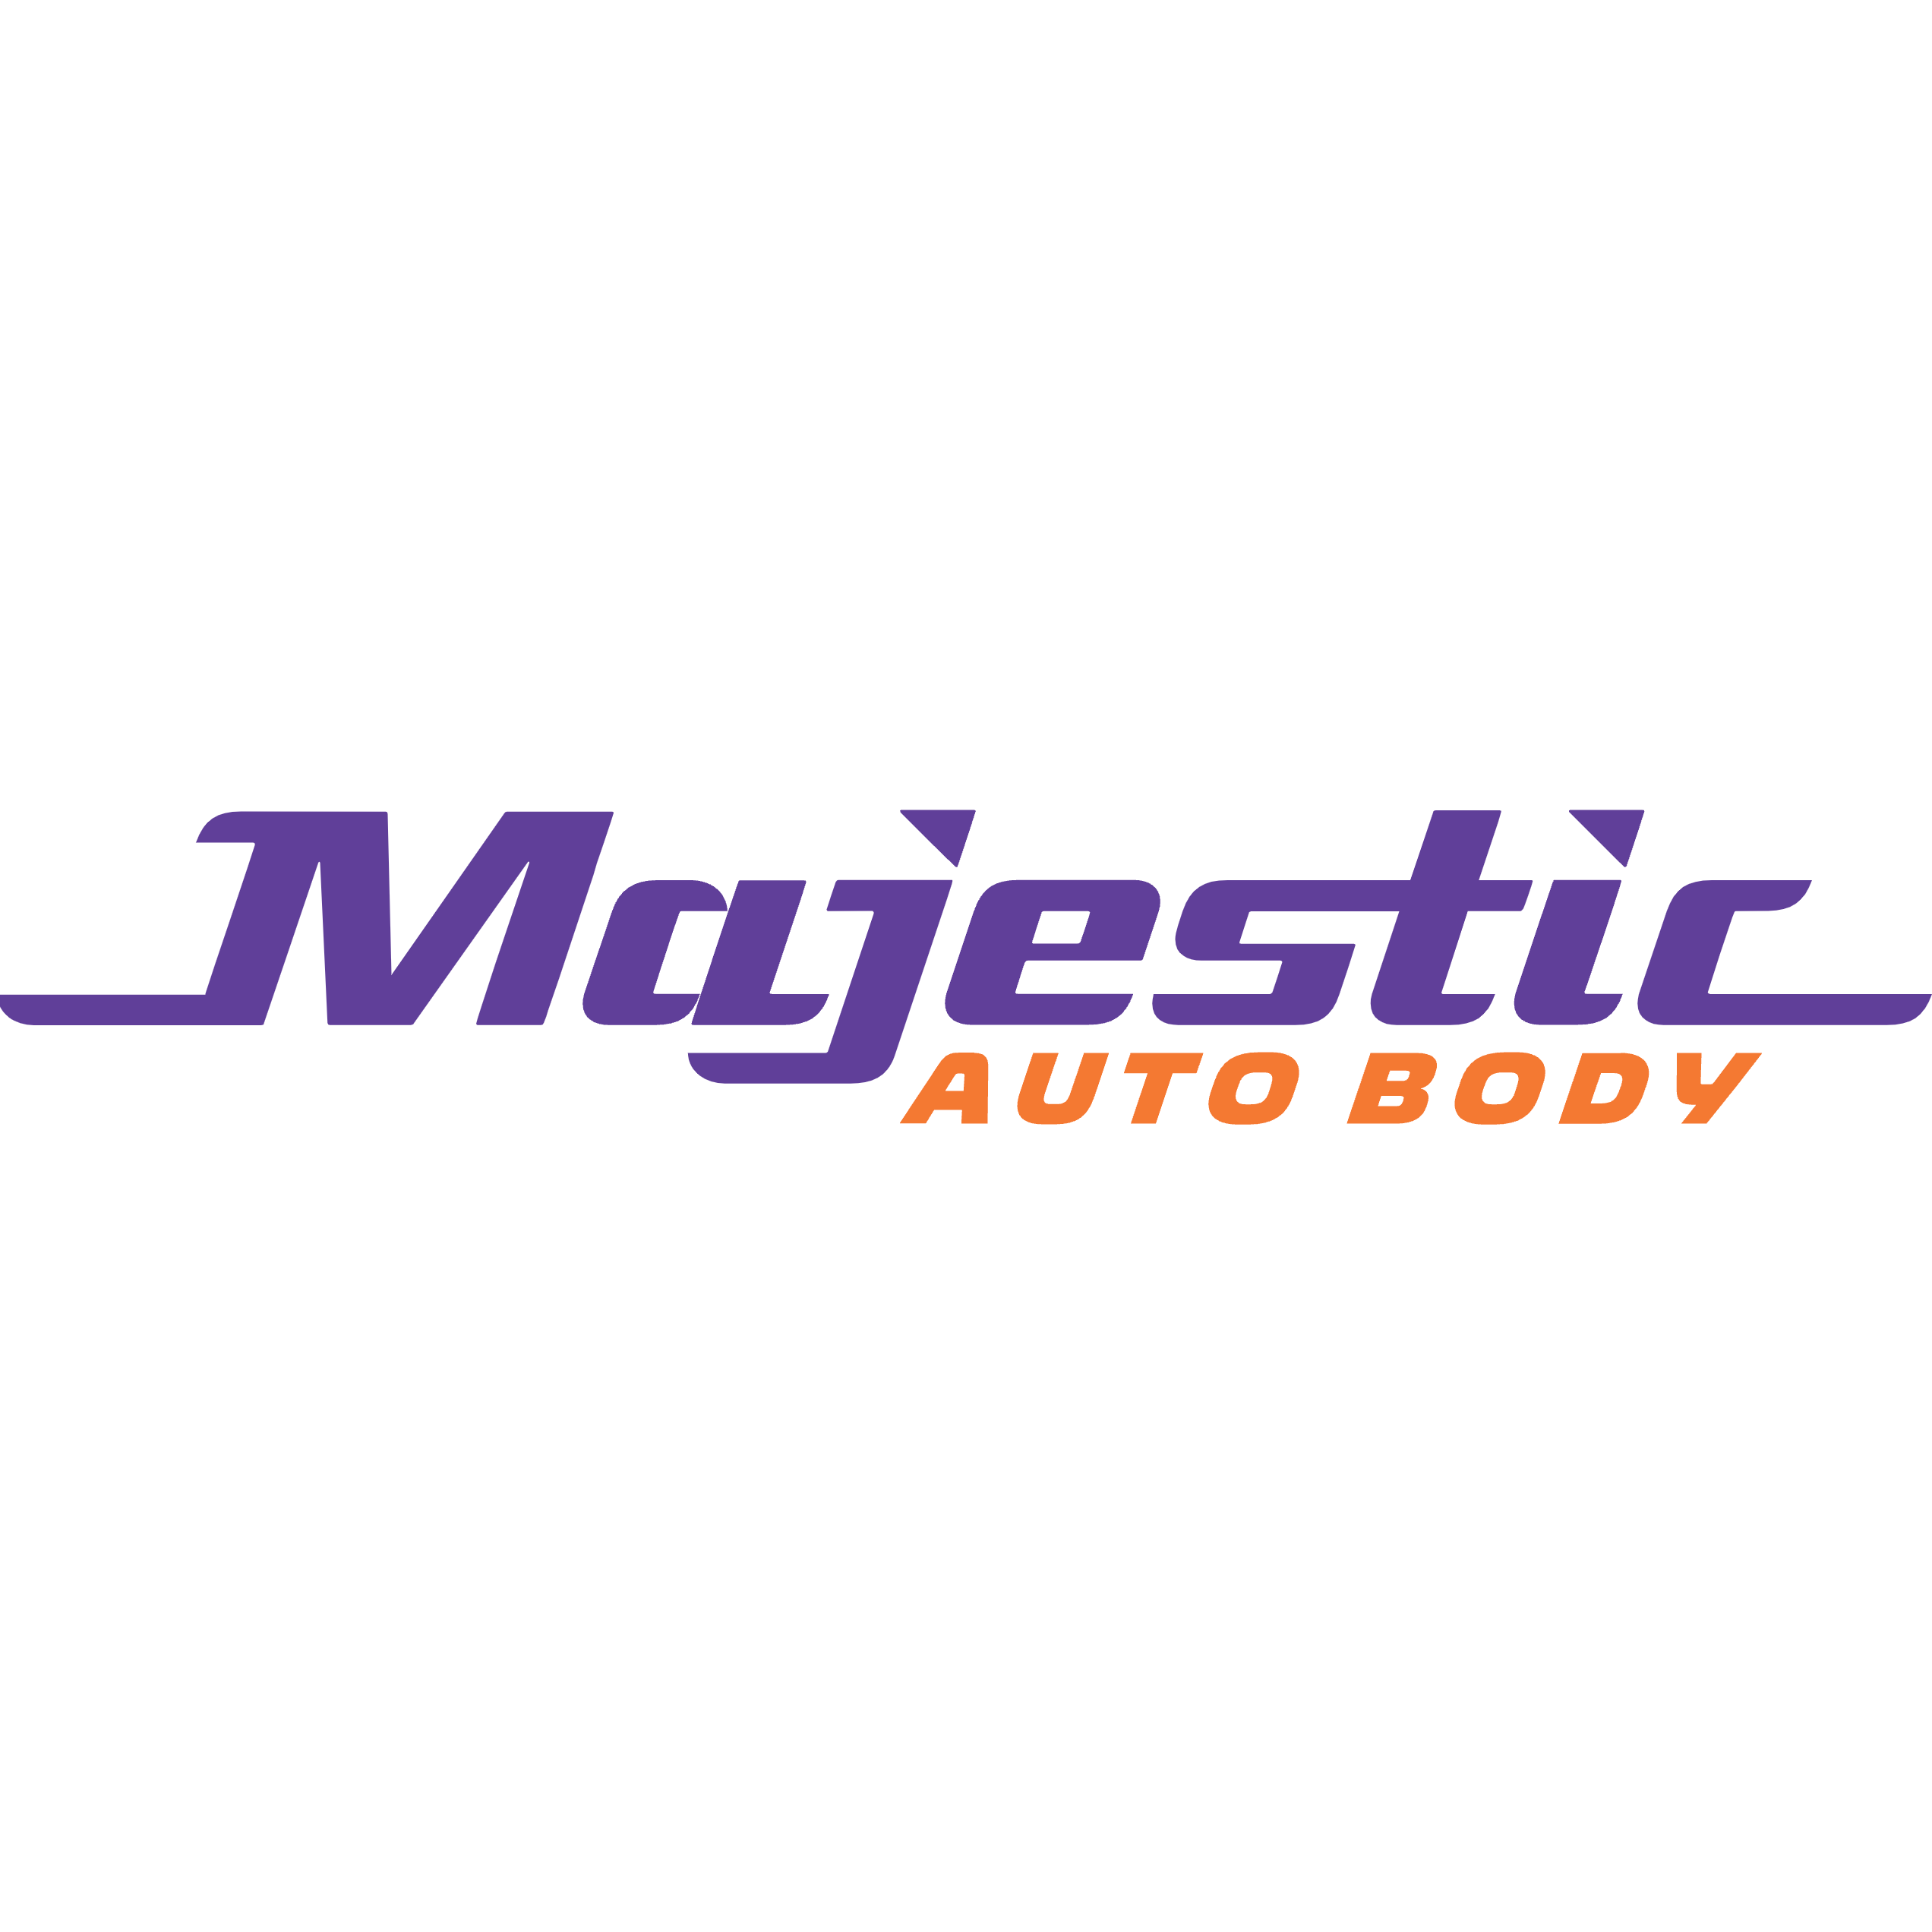 Majestic Auto Body - Idaho Falls, ID 83401 - (208)524-1111 | ShowMeLocal.com